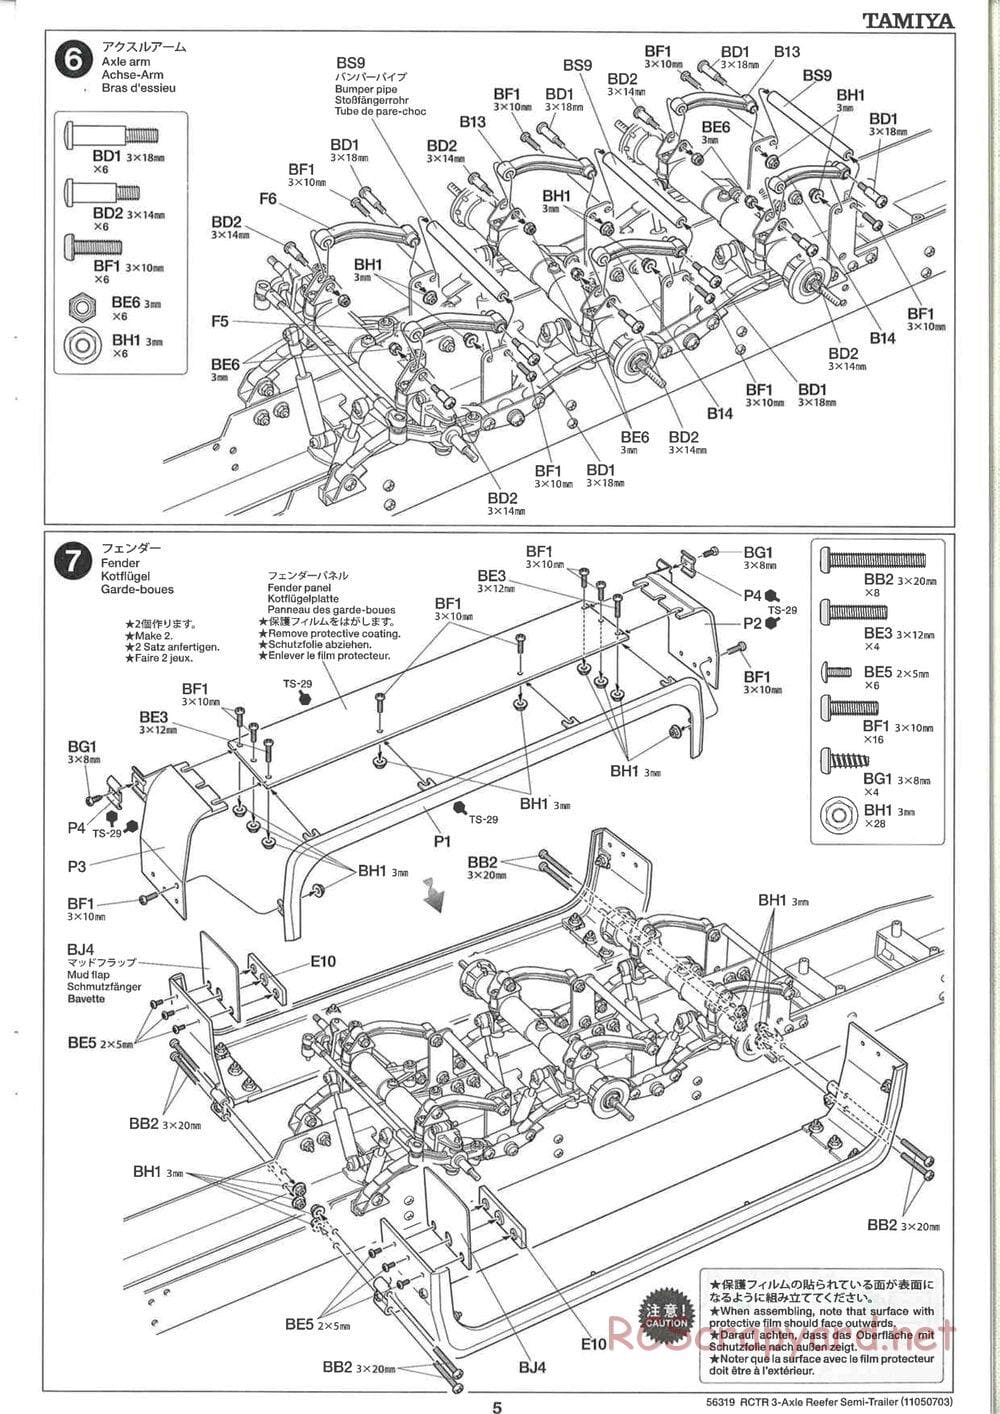 Tamiya - Semi Reefer Trailer Chassis - Manual - Page 5